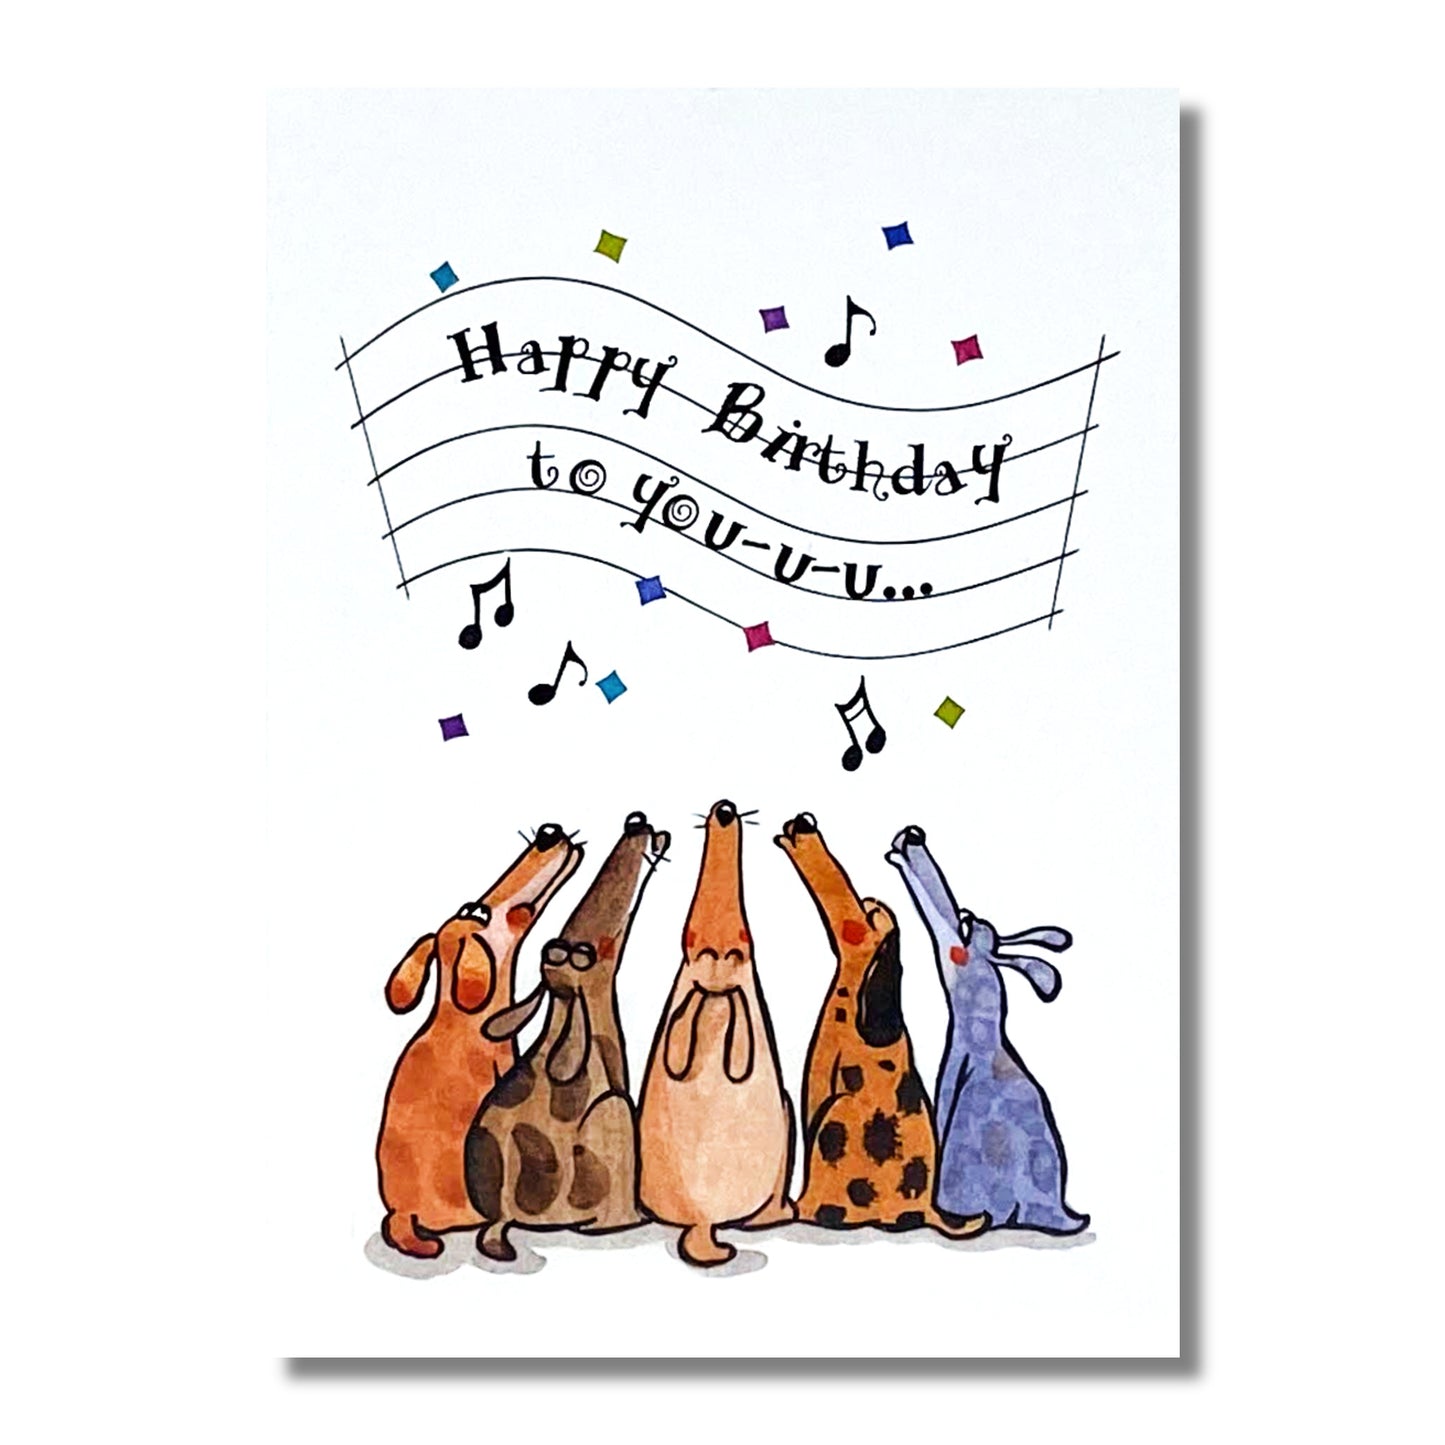 Birthday Card — Happy Birthday to You-u-u-u